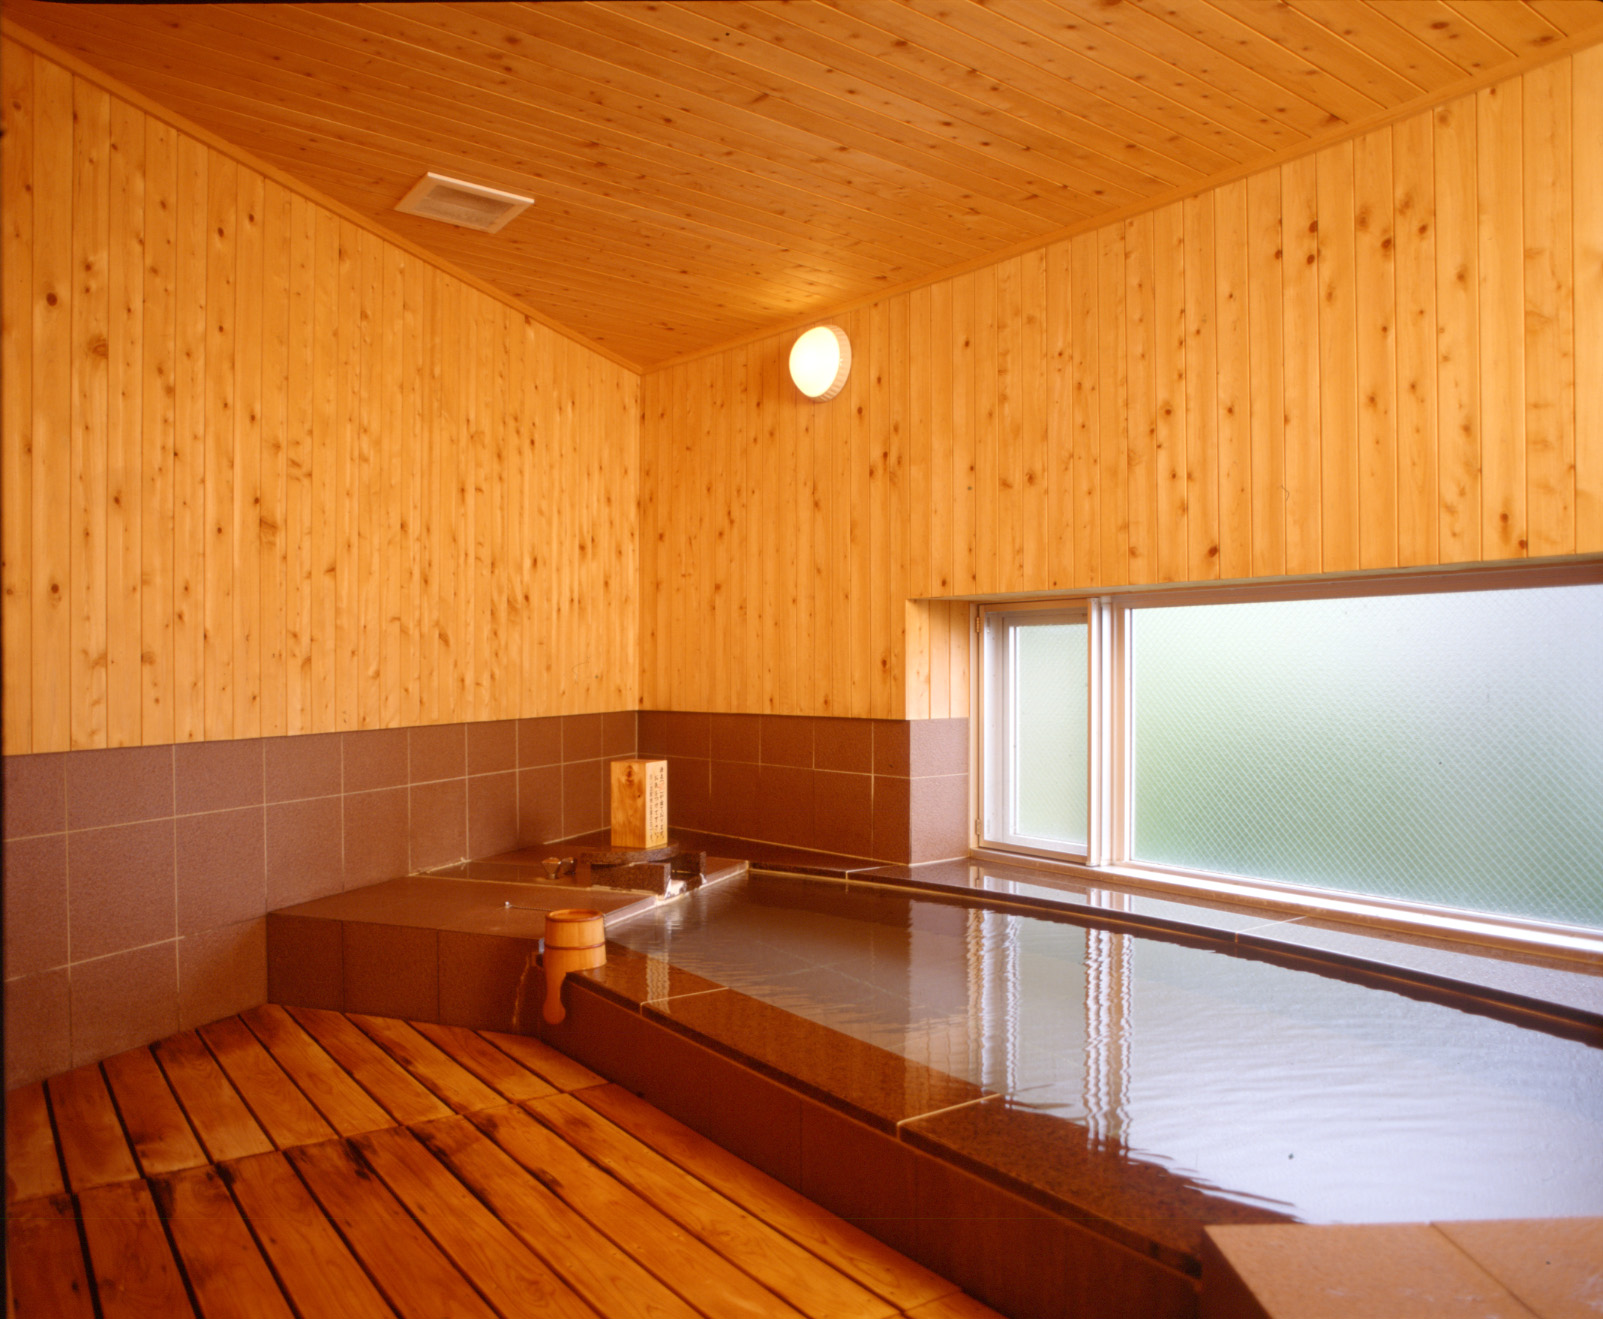 Private indoor bath